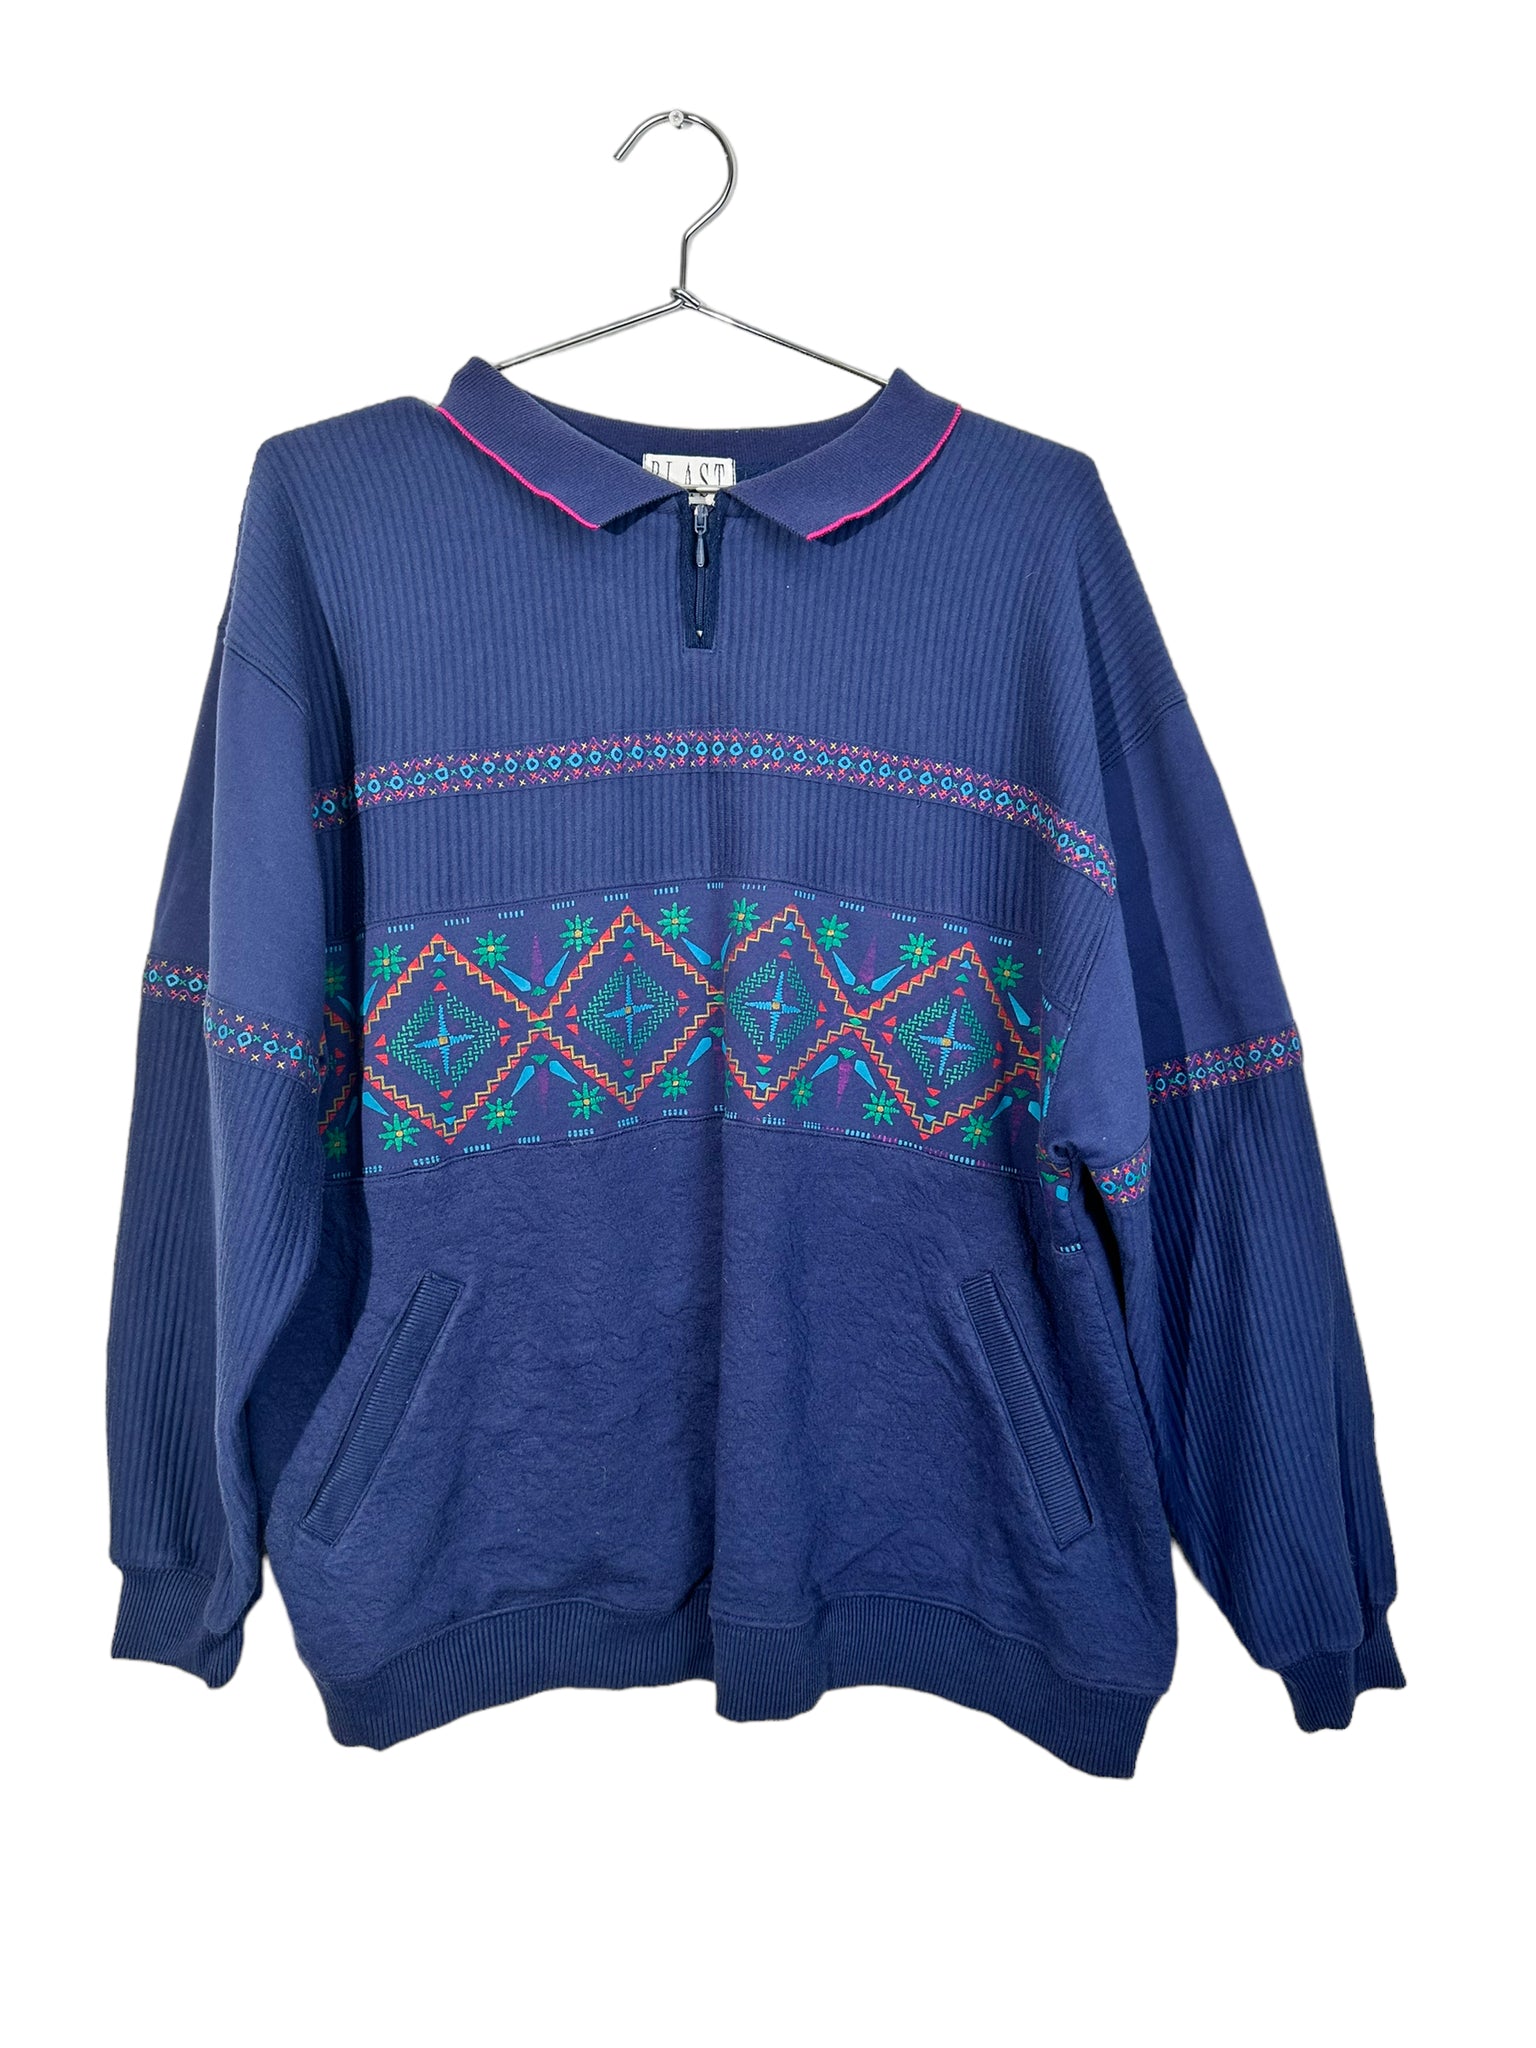 Tribal Print Striped Collard Sweater